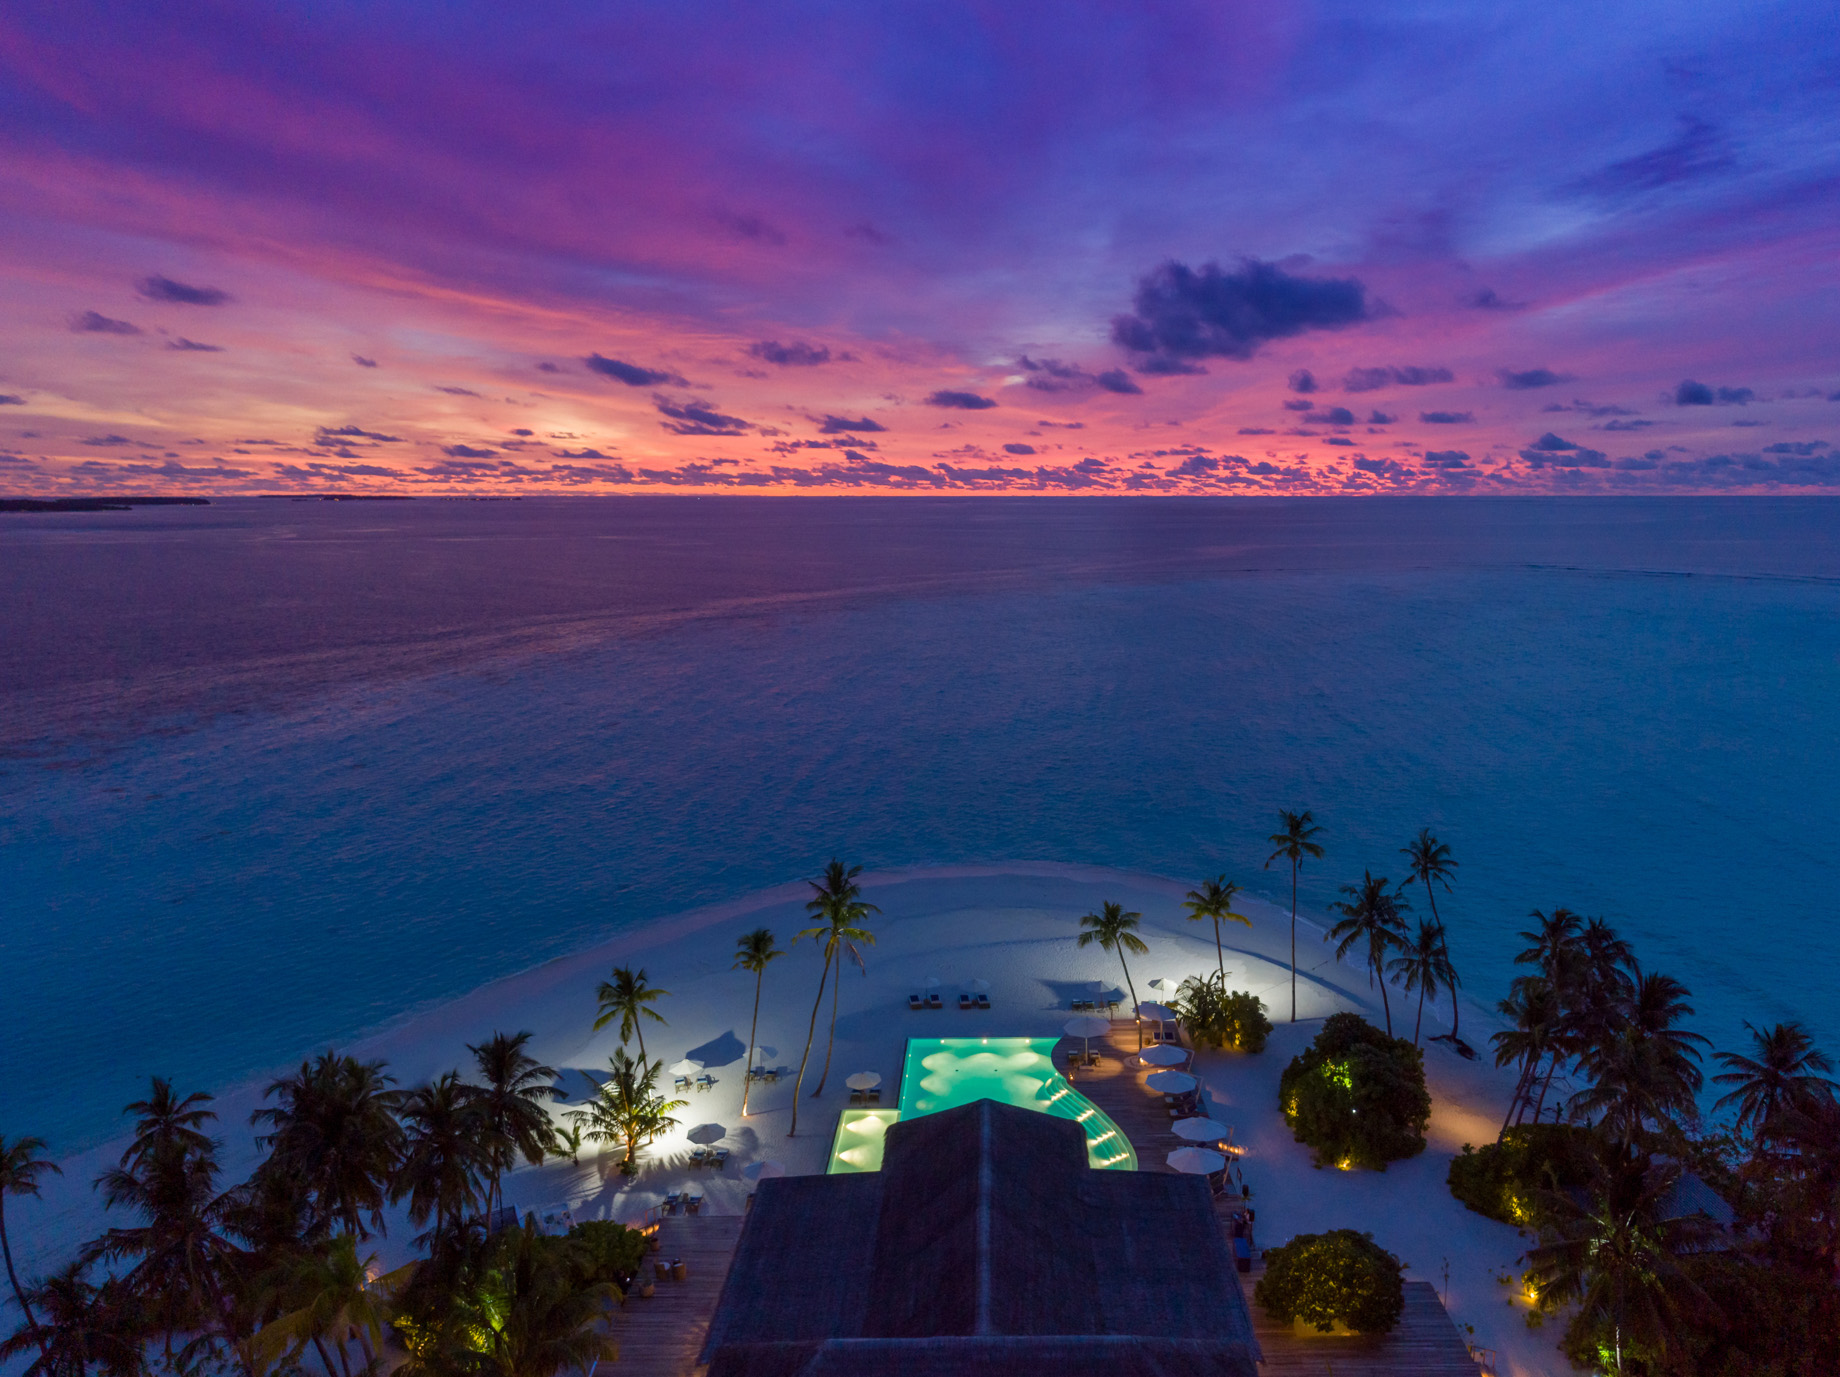 Baglioni Resort Maldives – Maagau Island, Rinbudhoo, Maldives – Gusto Restaurant and Pool Aerial View Sunset